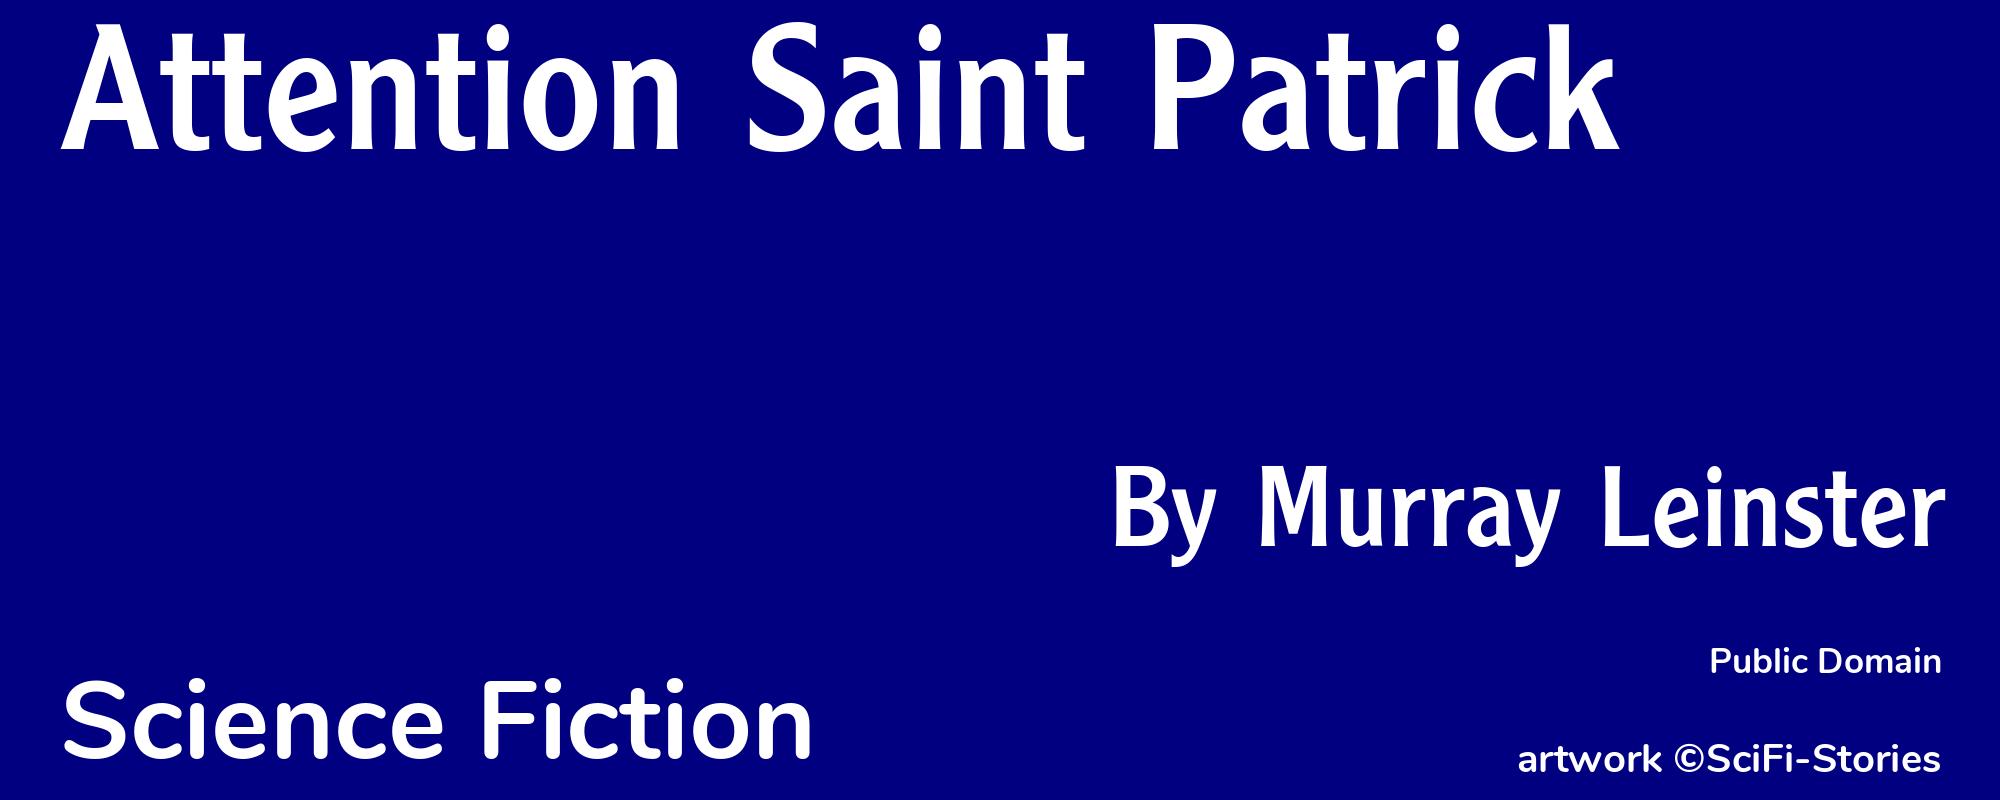 Attention Saint Patrick - Cover